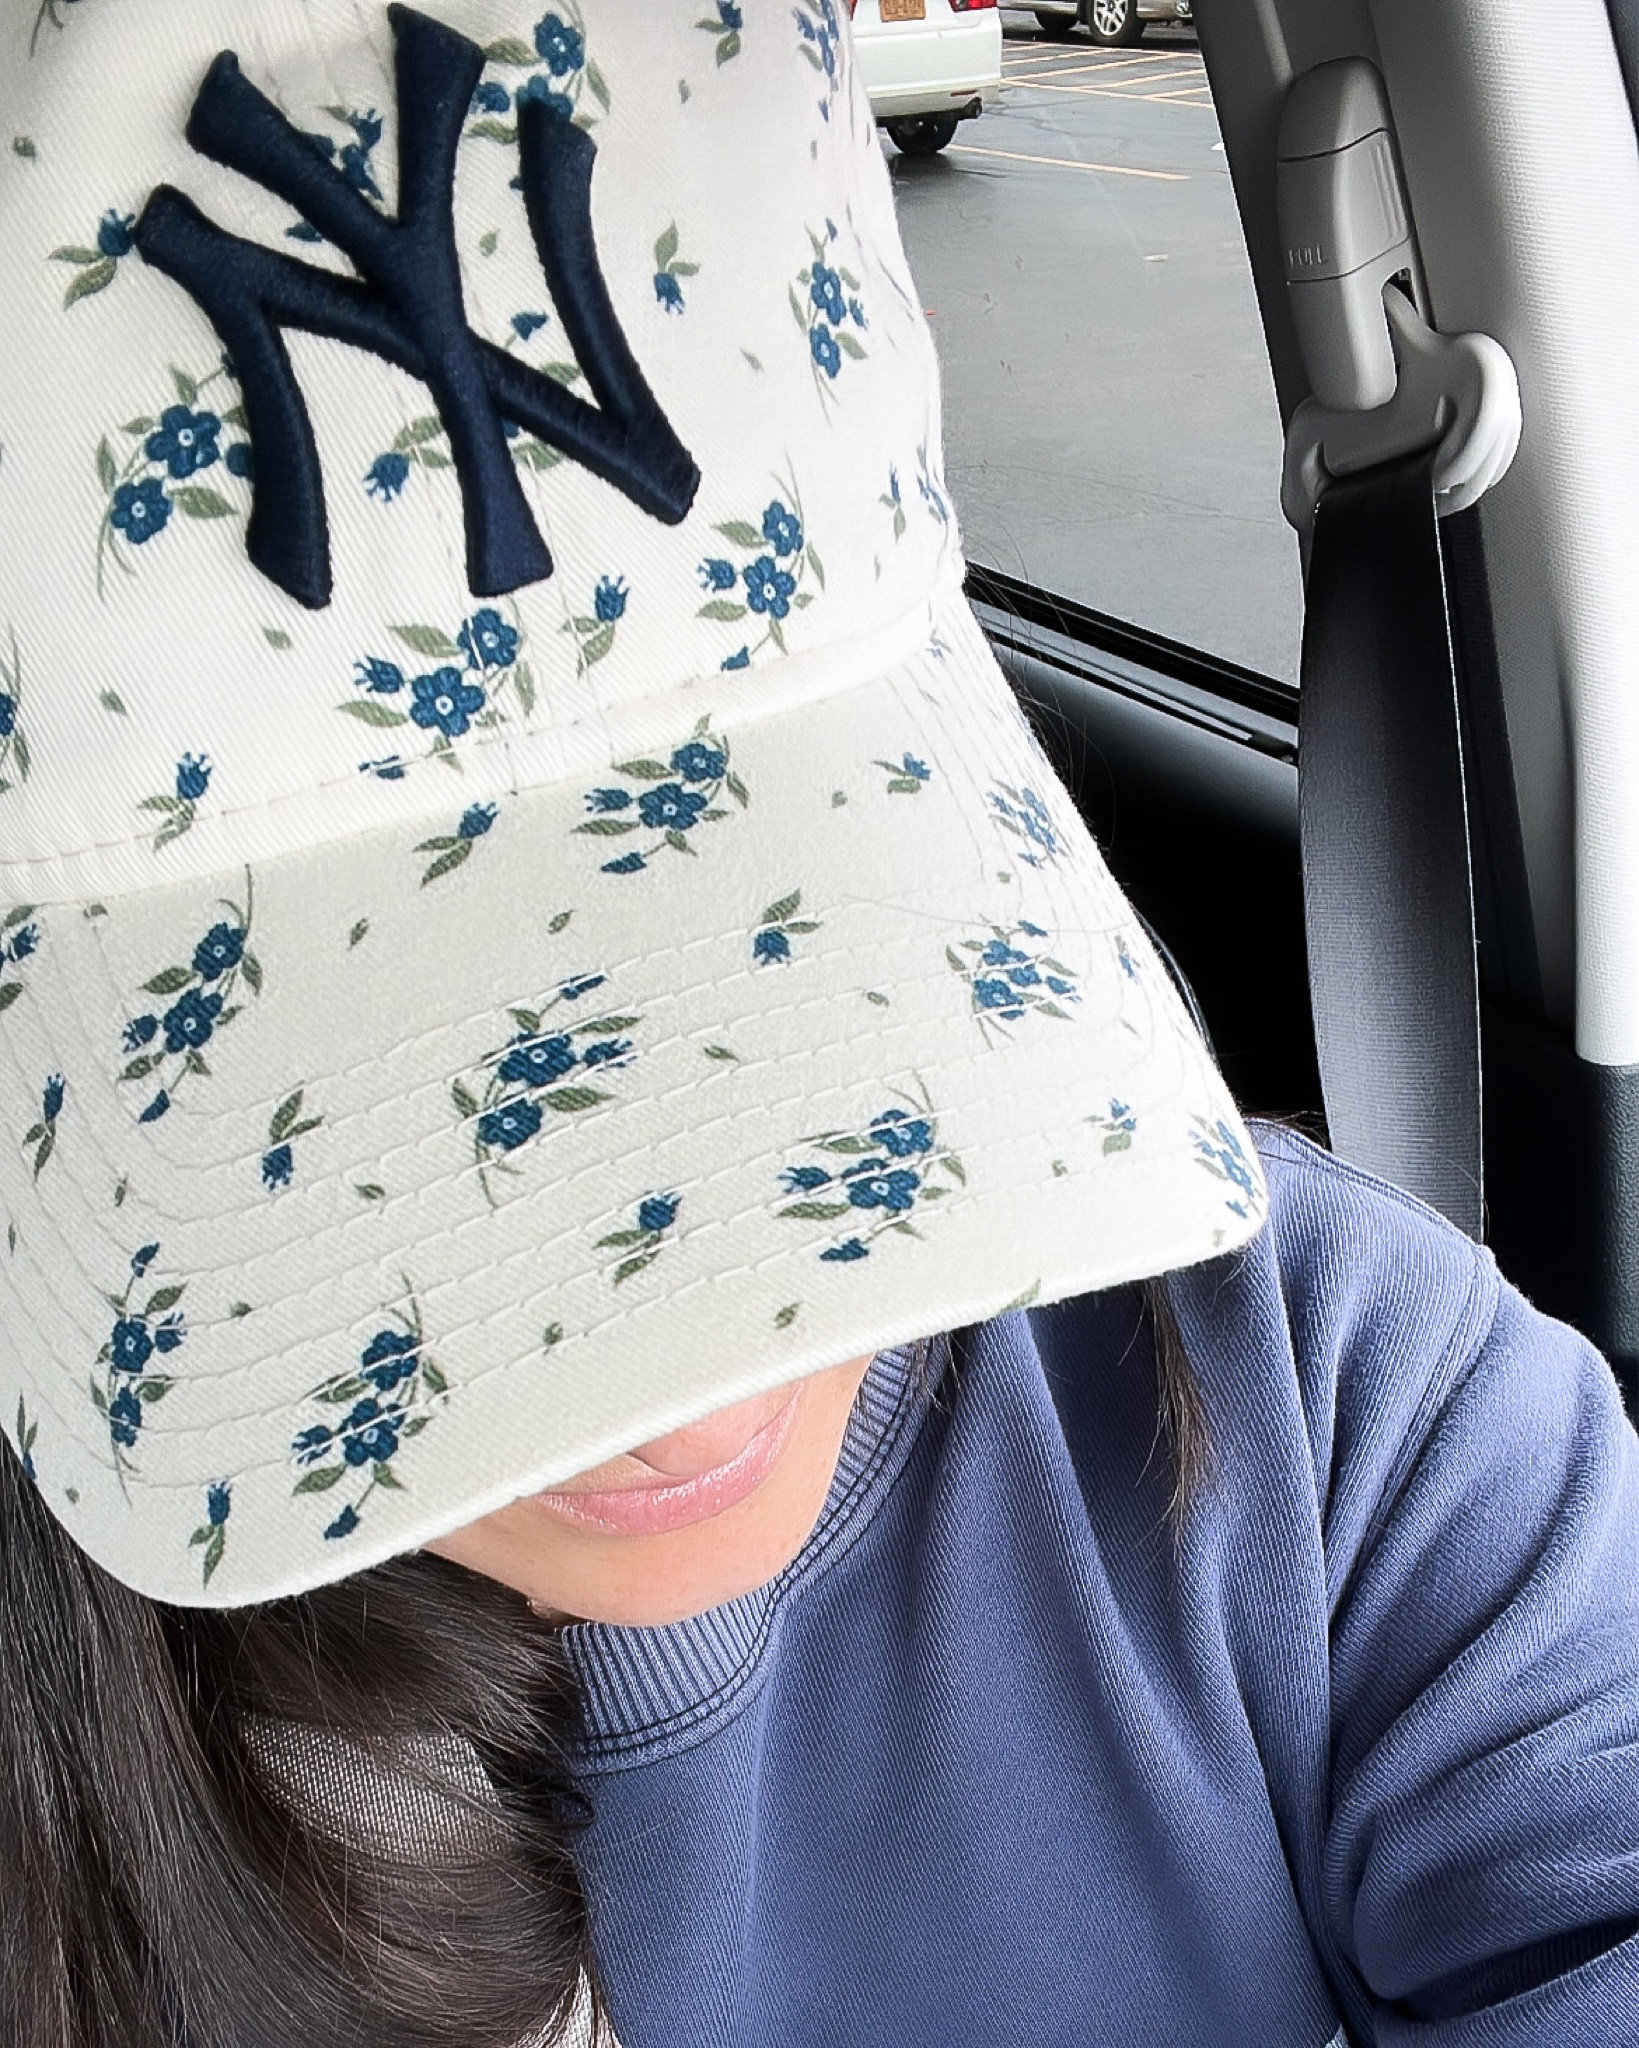 Women's New Era Cream New York Yankees Floral 9TWENTY Adjustable Hat